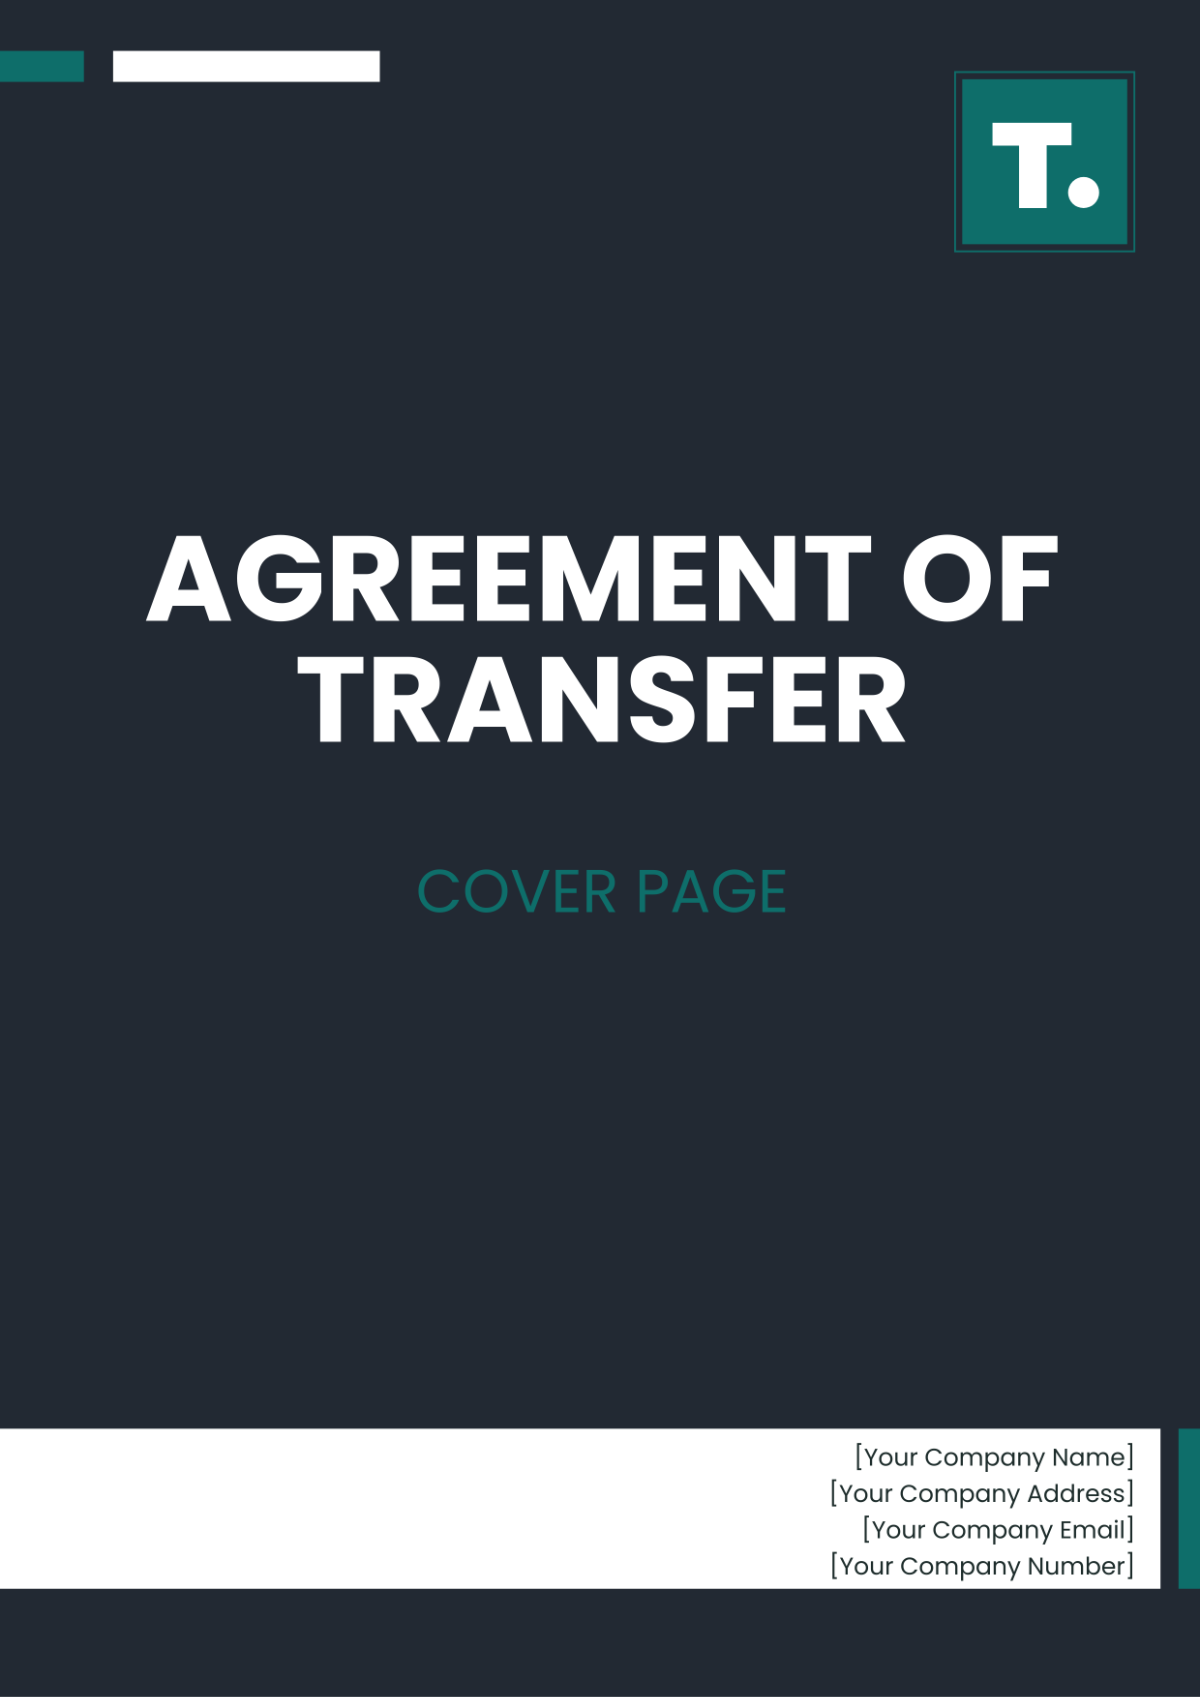 Agreement of Transfer